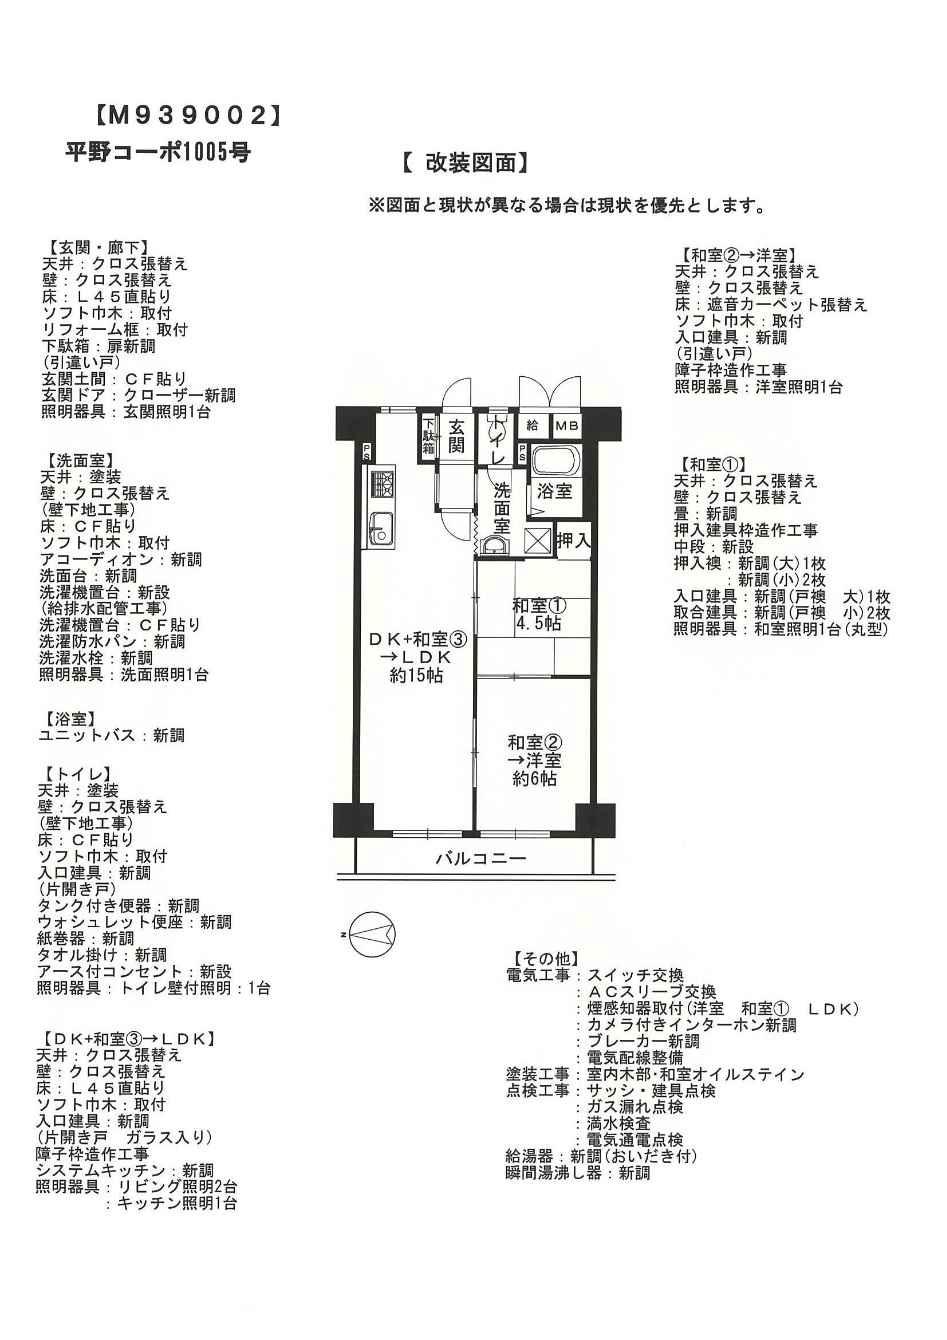 Floor plan. 2LDK, Price 9.8 million yen, Footprint 51.3 sq m , Balcony area 6.48 sq m